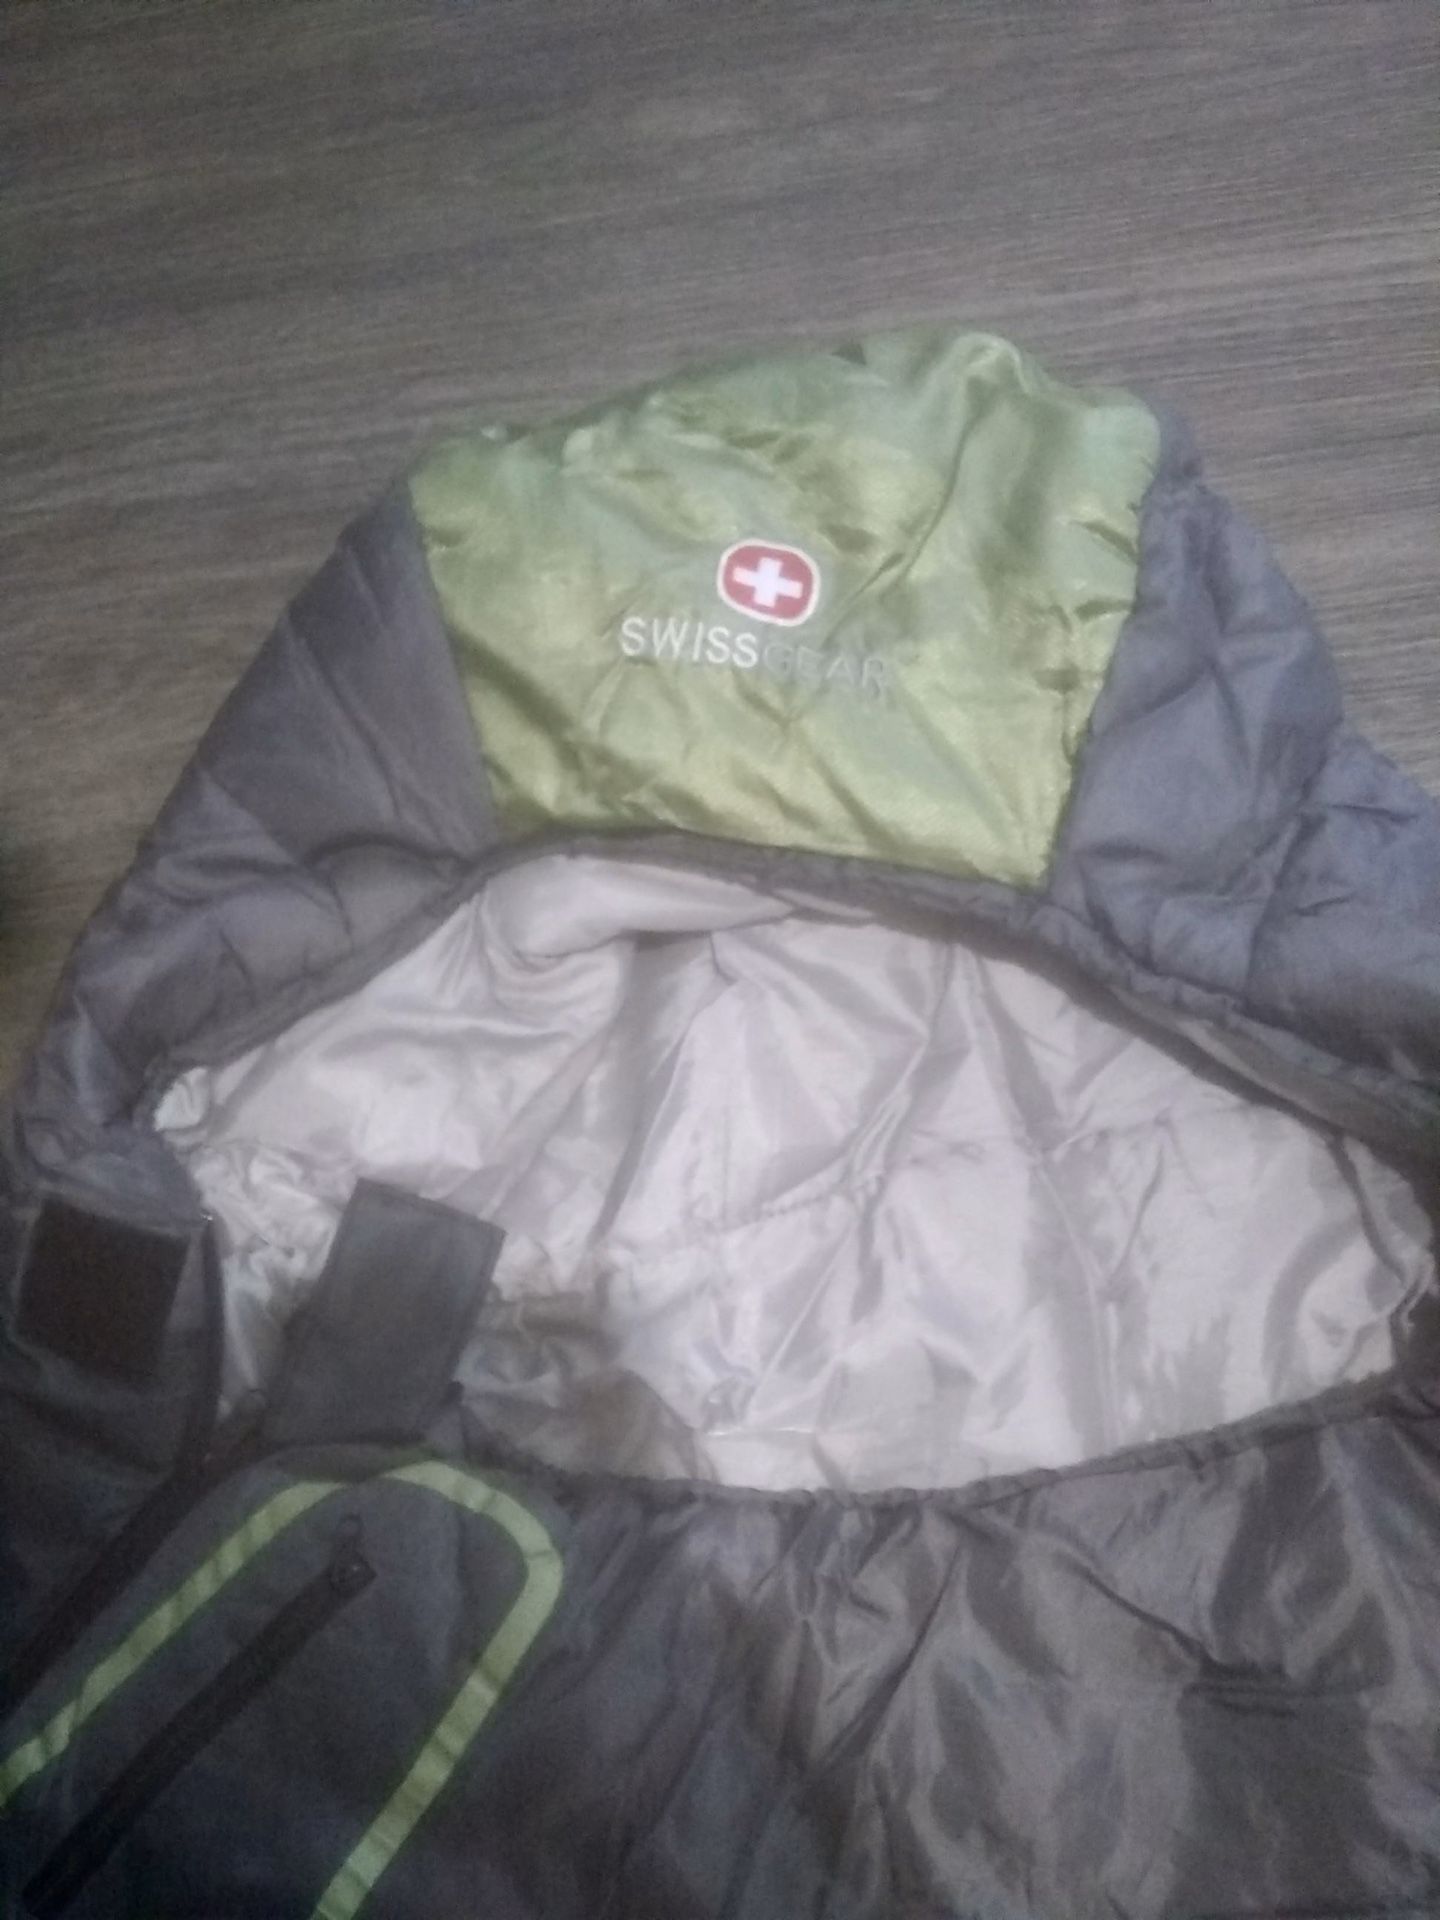 Swissgear Sleeping Bag